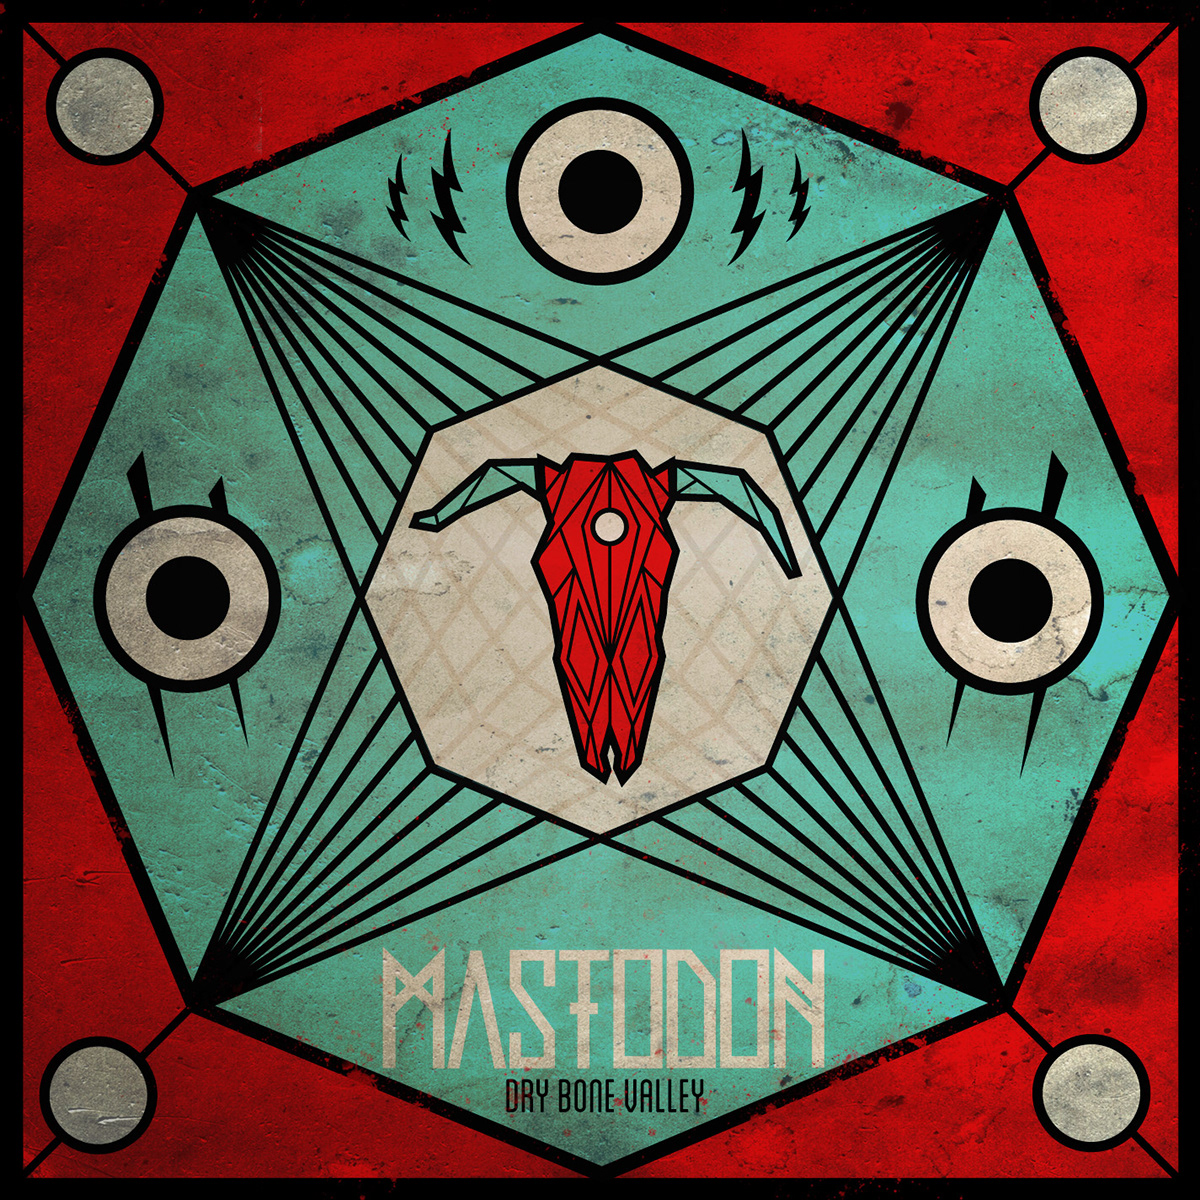 mastodon dry bone valley talenthouse graphic design 